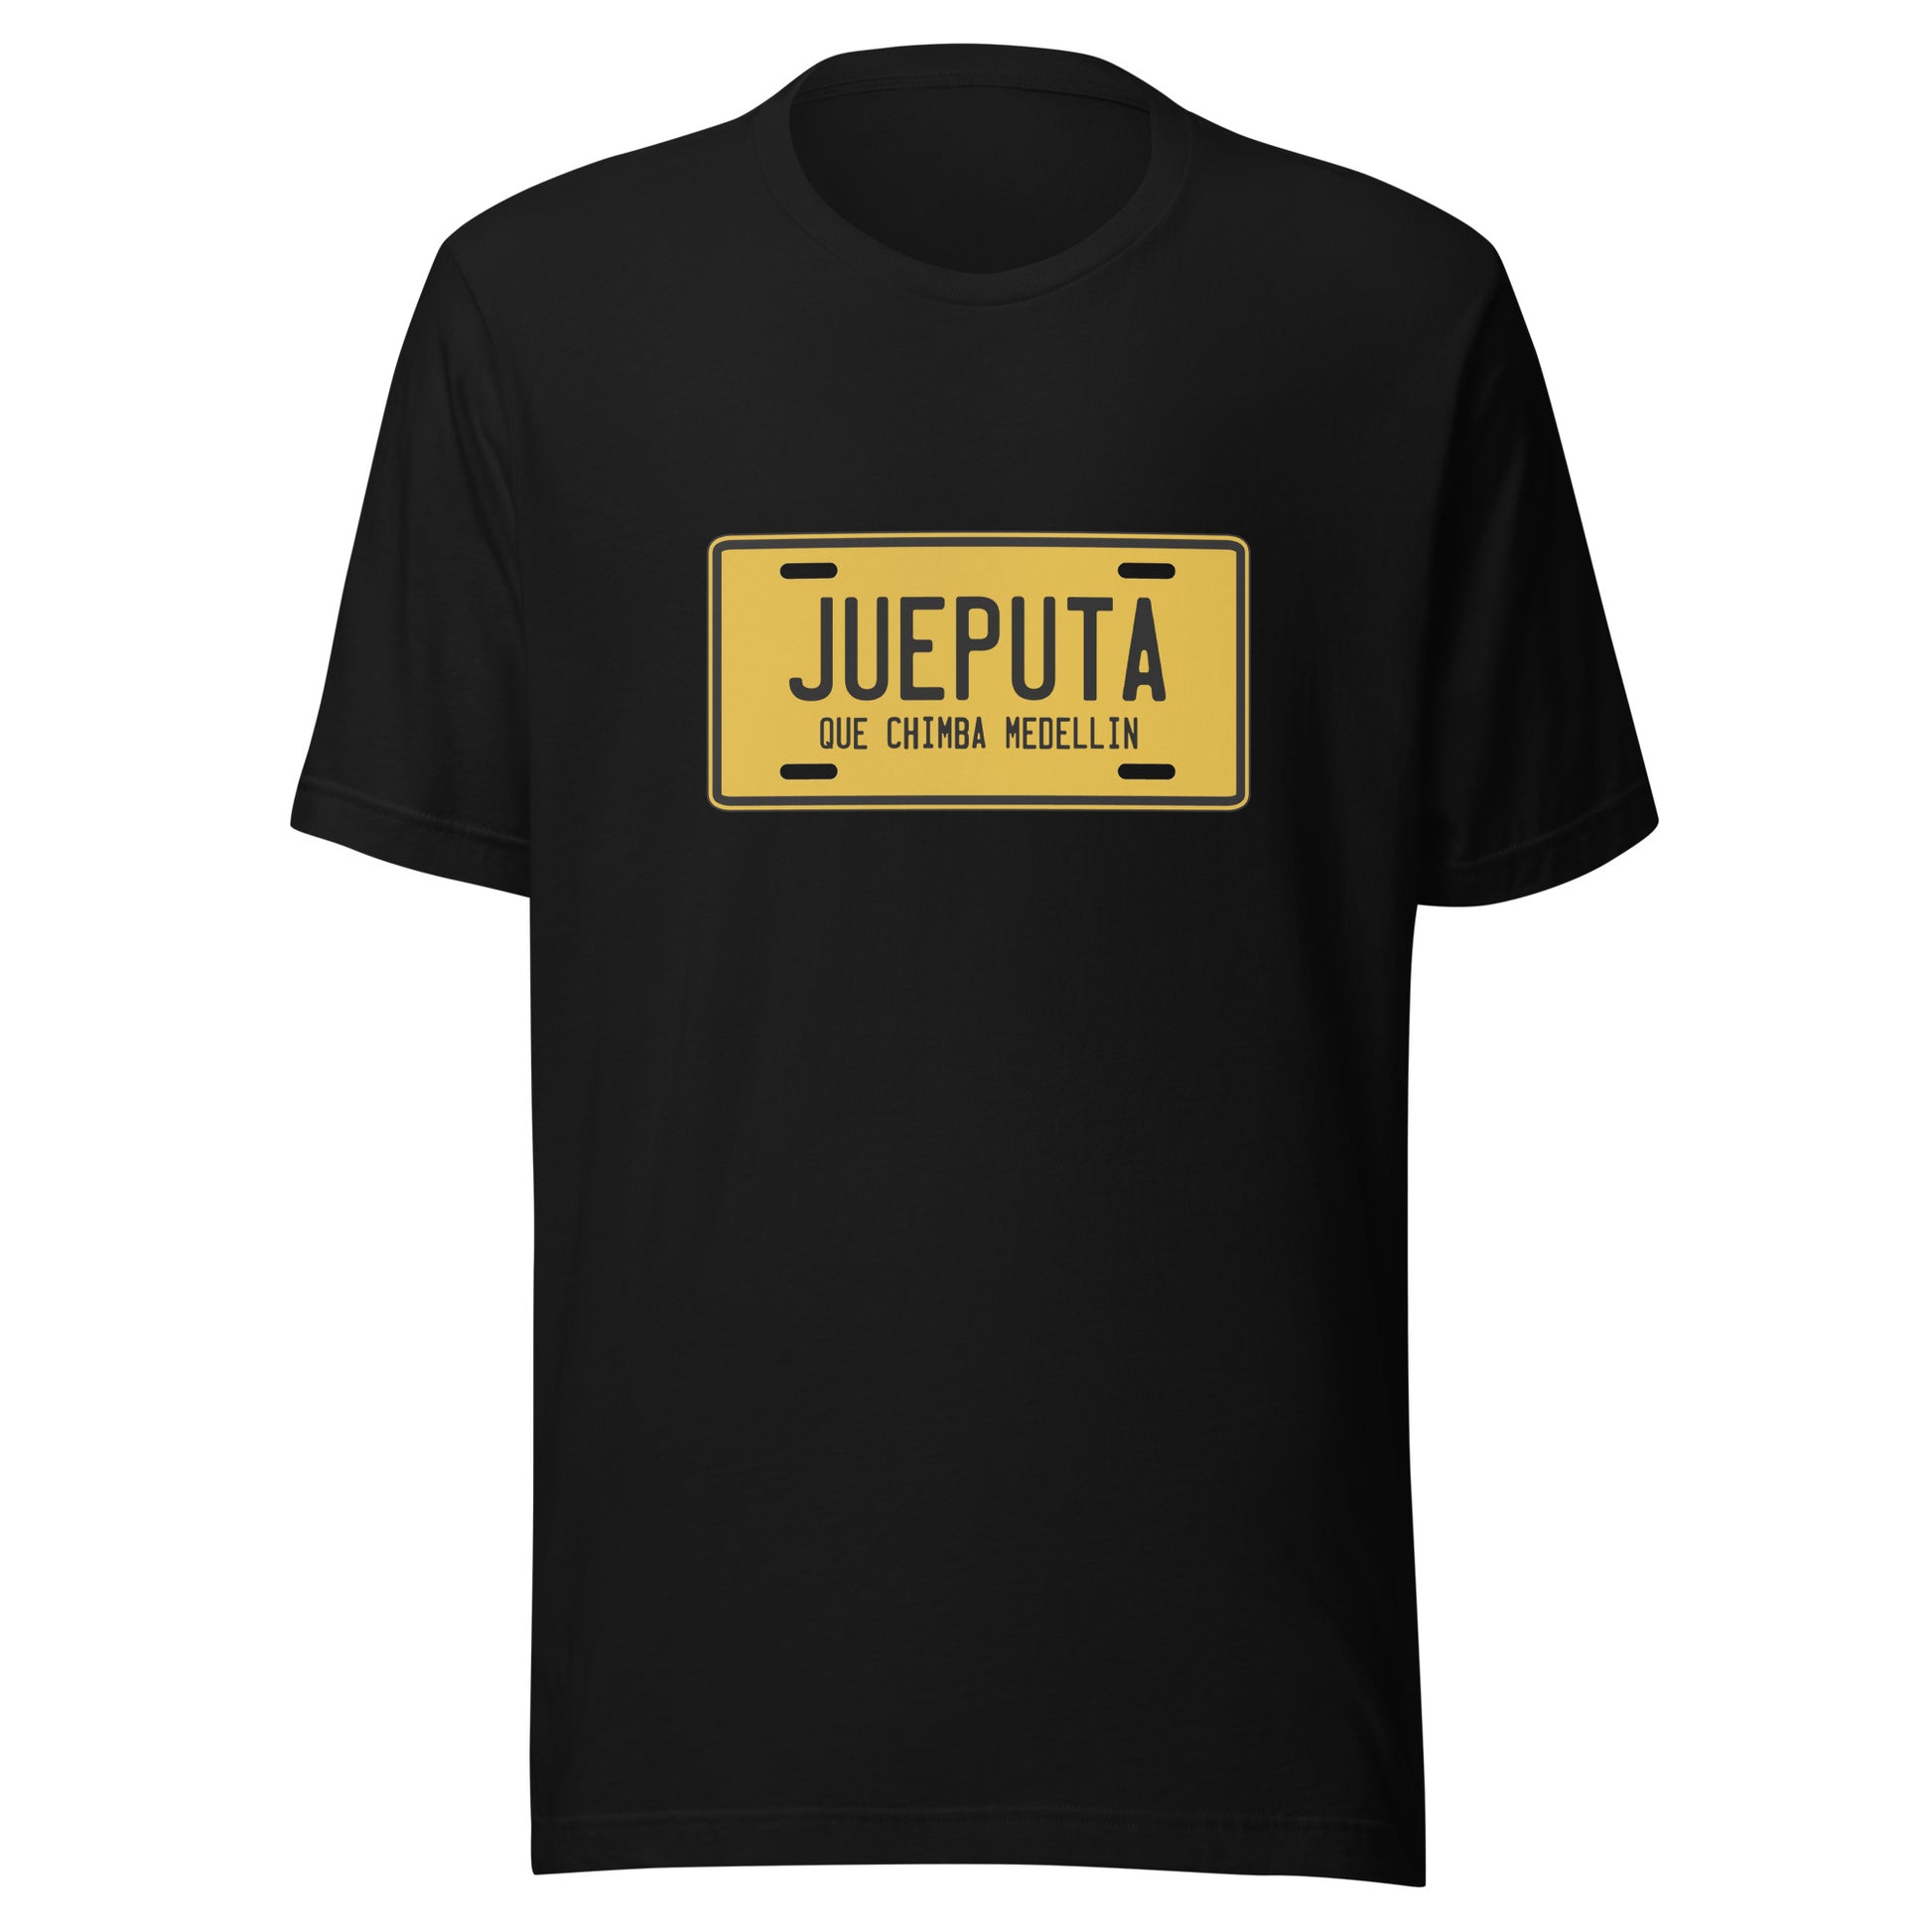 Jueputa Que Chimba Medellin T-shirt Made in Medellin 